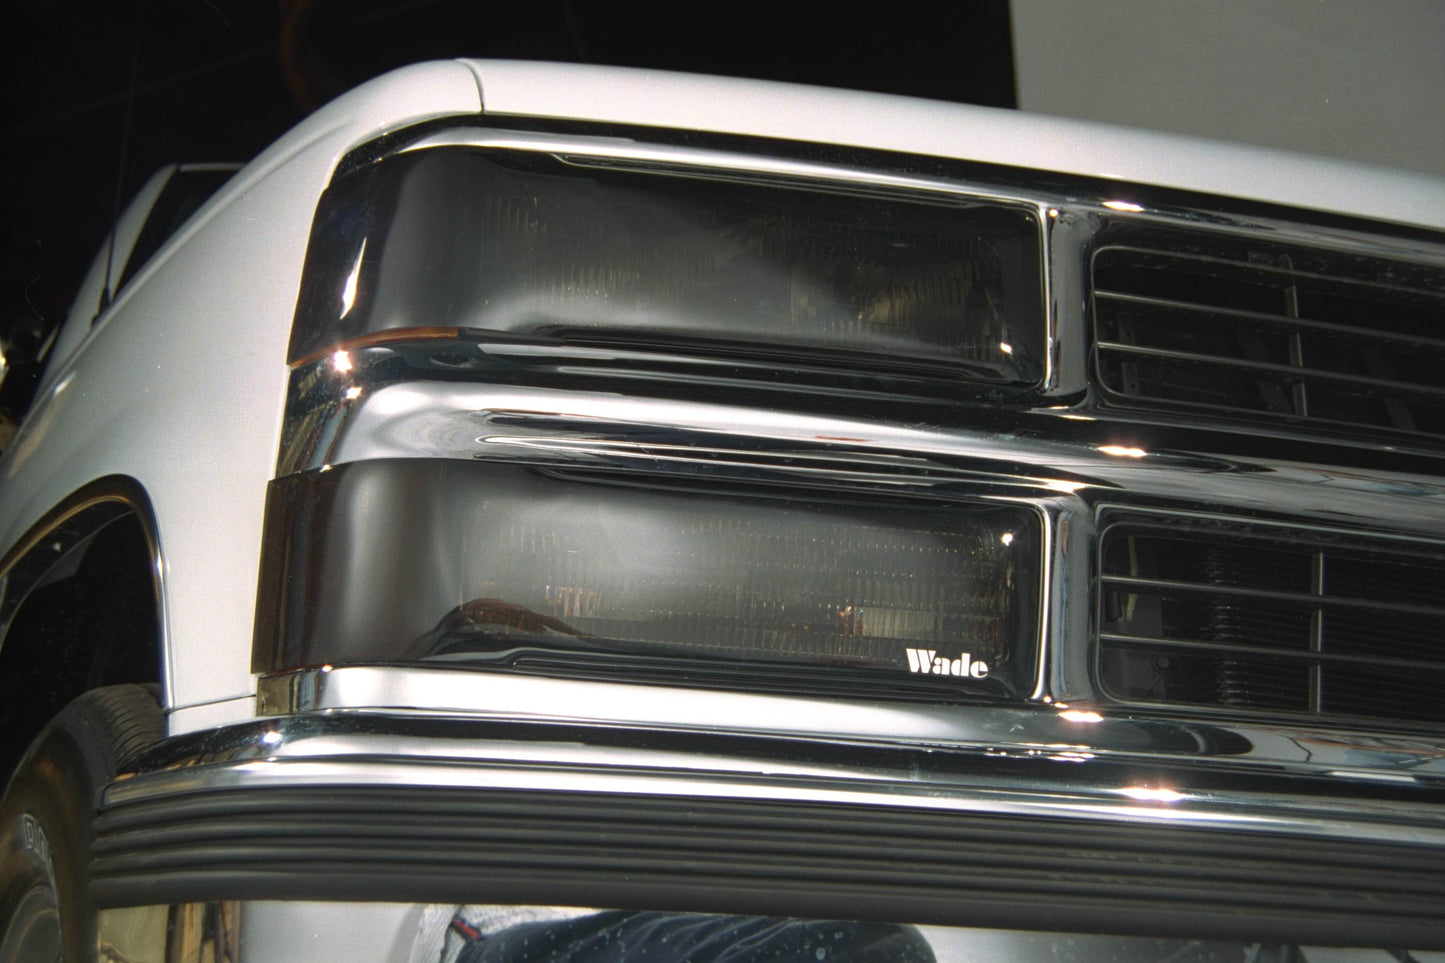 2000 GMC Sonoma Head Light Covers